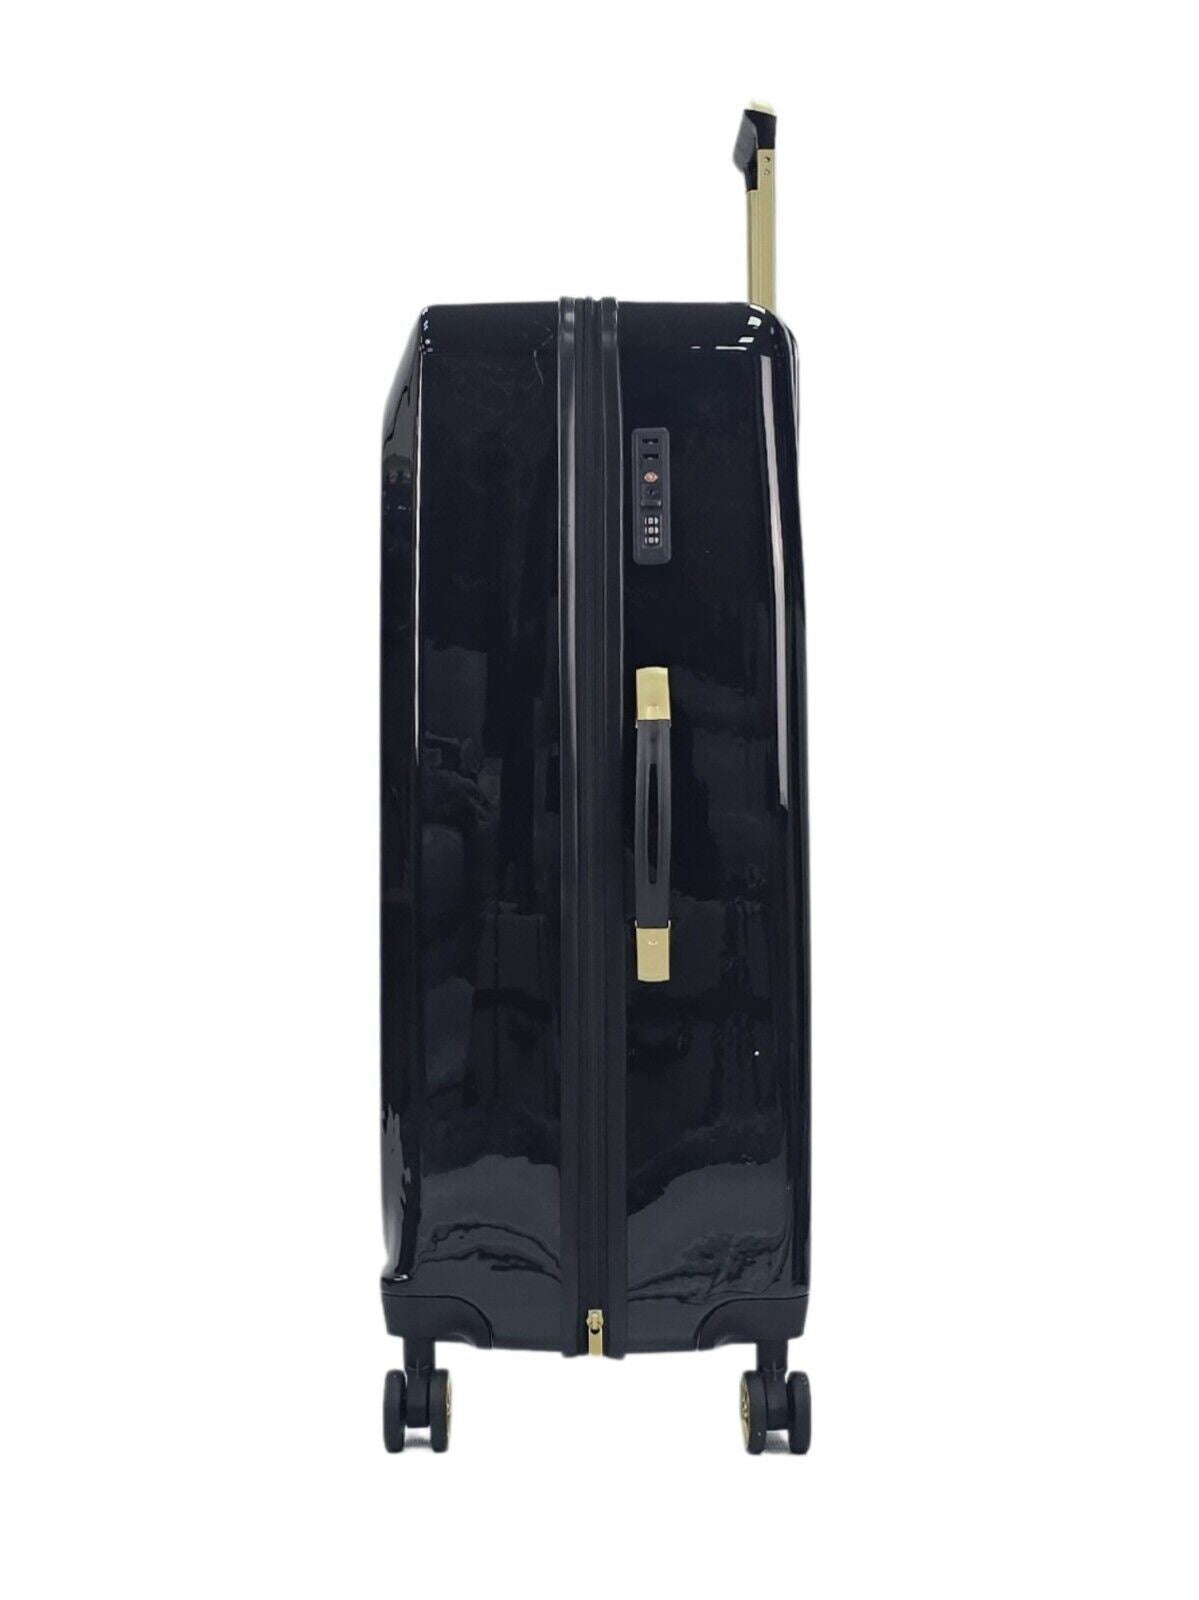 Hard Shell Black 4 Wheel Suitcase Flower Print Luggage Cabin